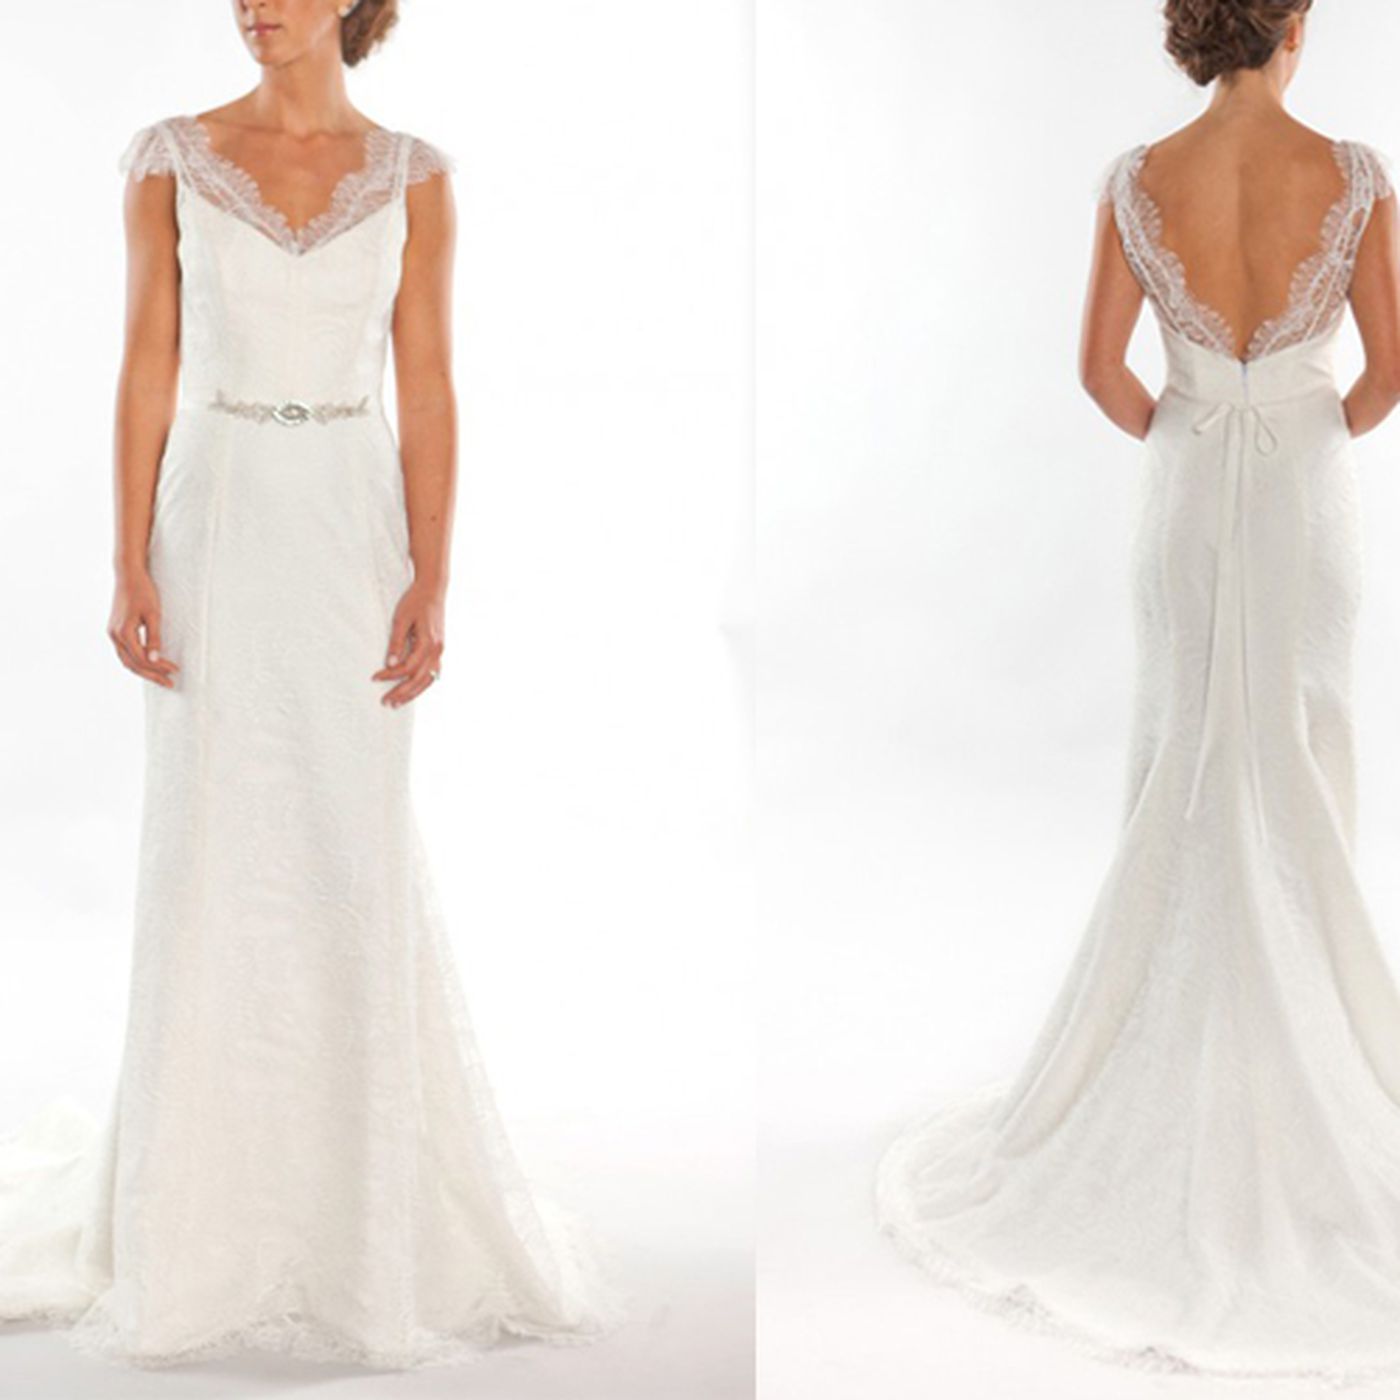 San Francisco's Trish Lee Designed the Looking Wedding Dress ...